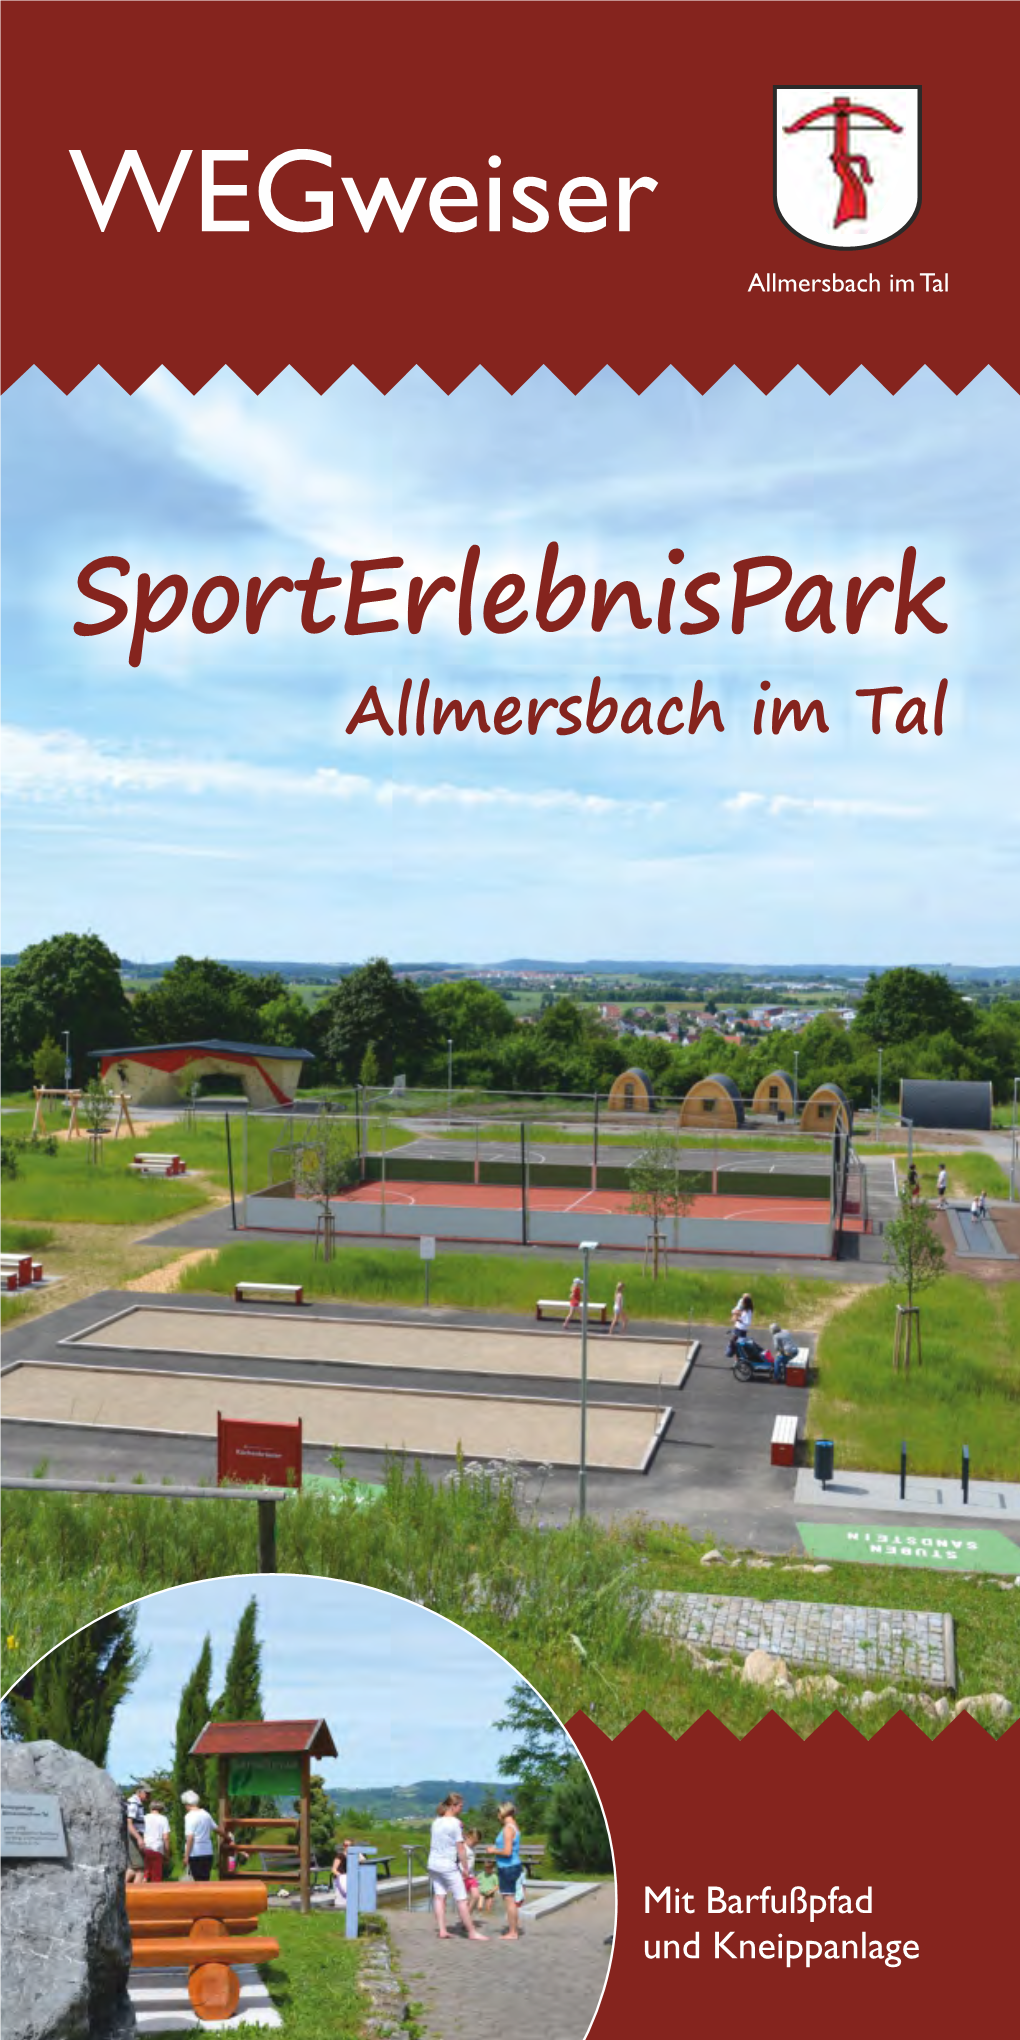 Wegweiser Sporterlebnispark 2017 Korrektur8 11-09-2017